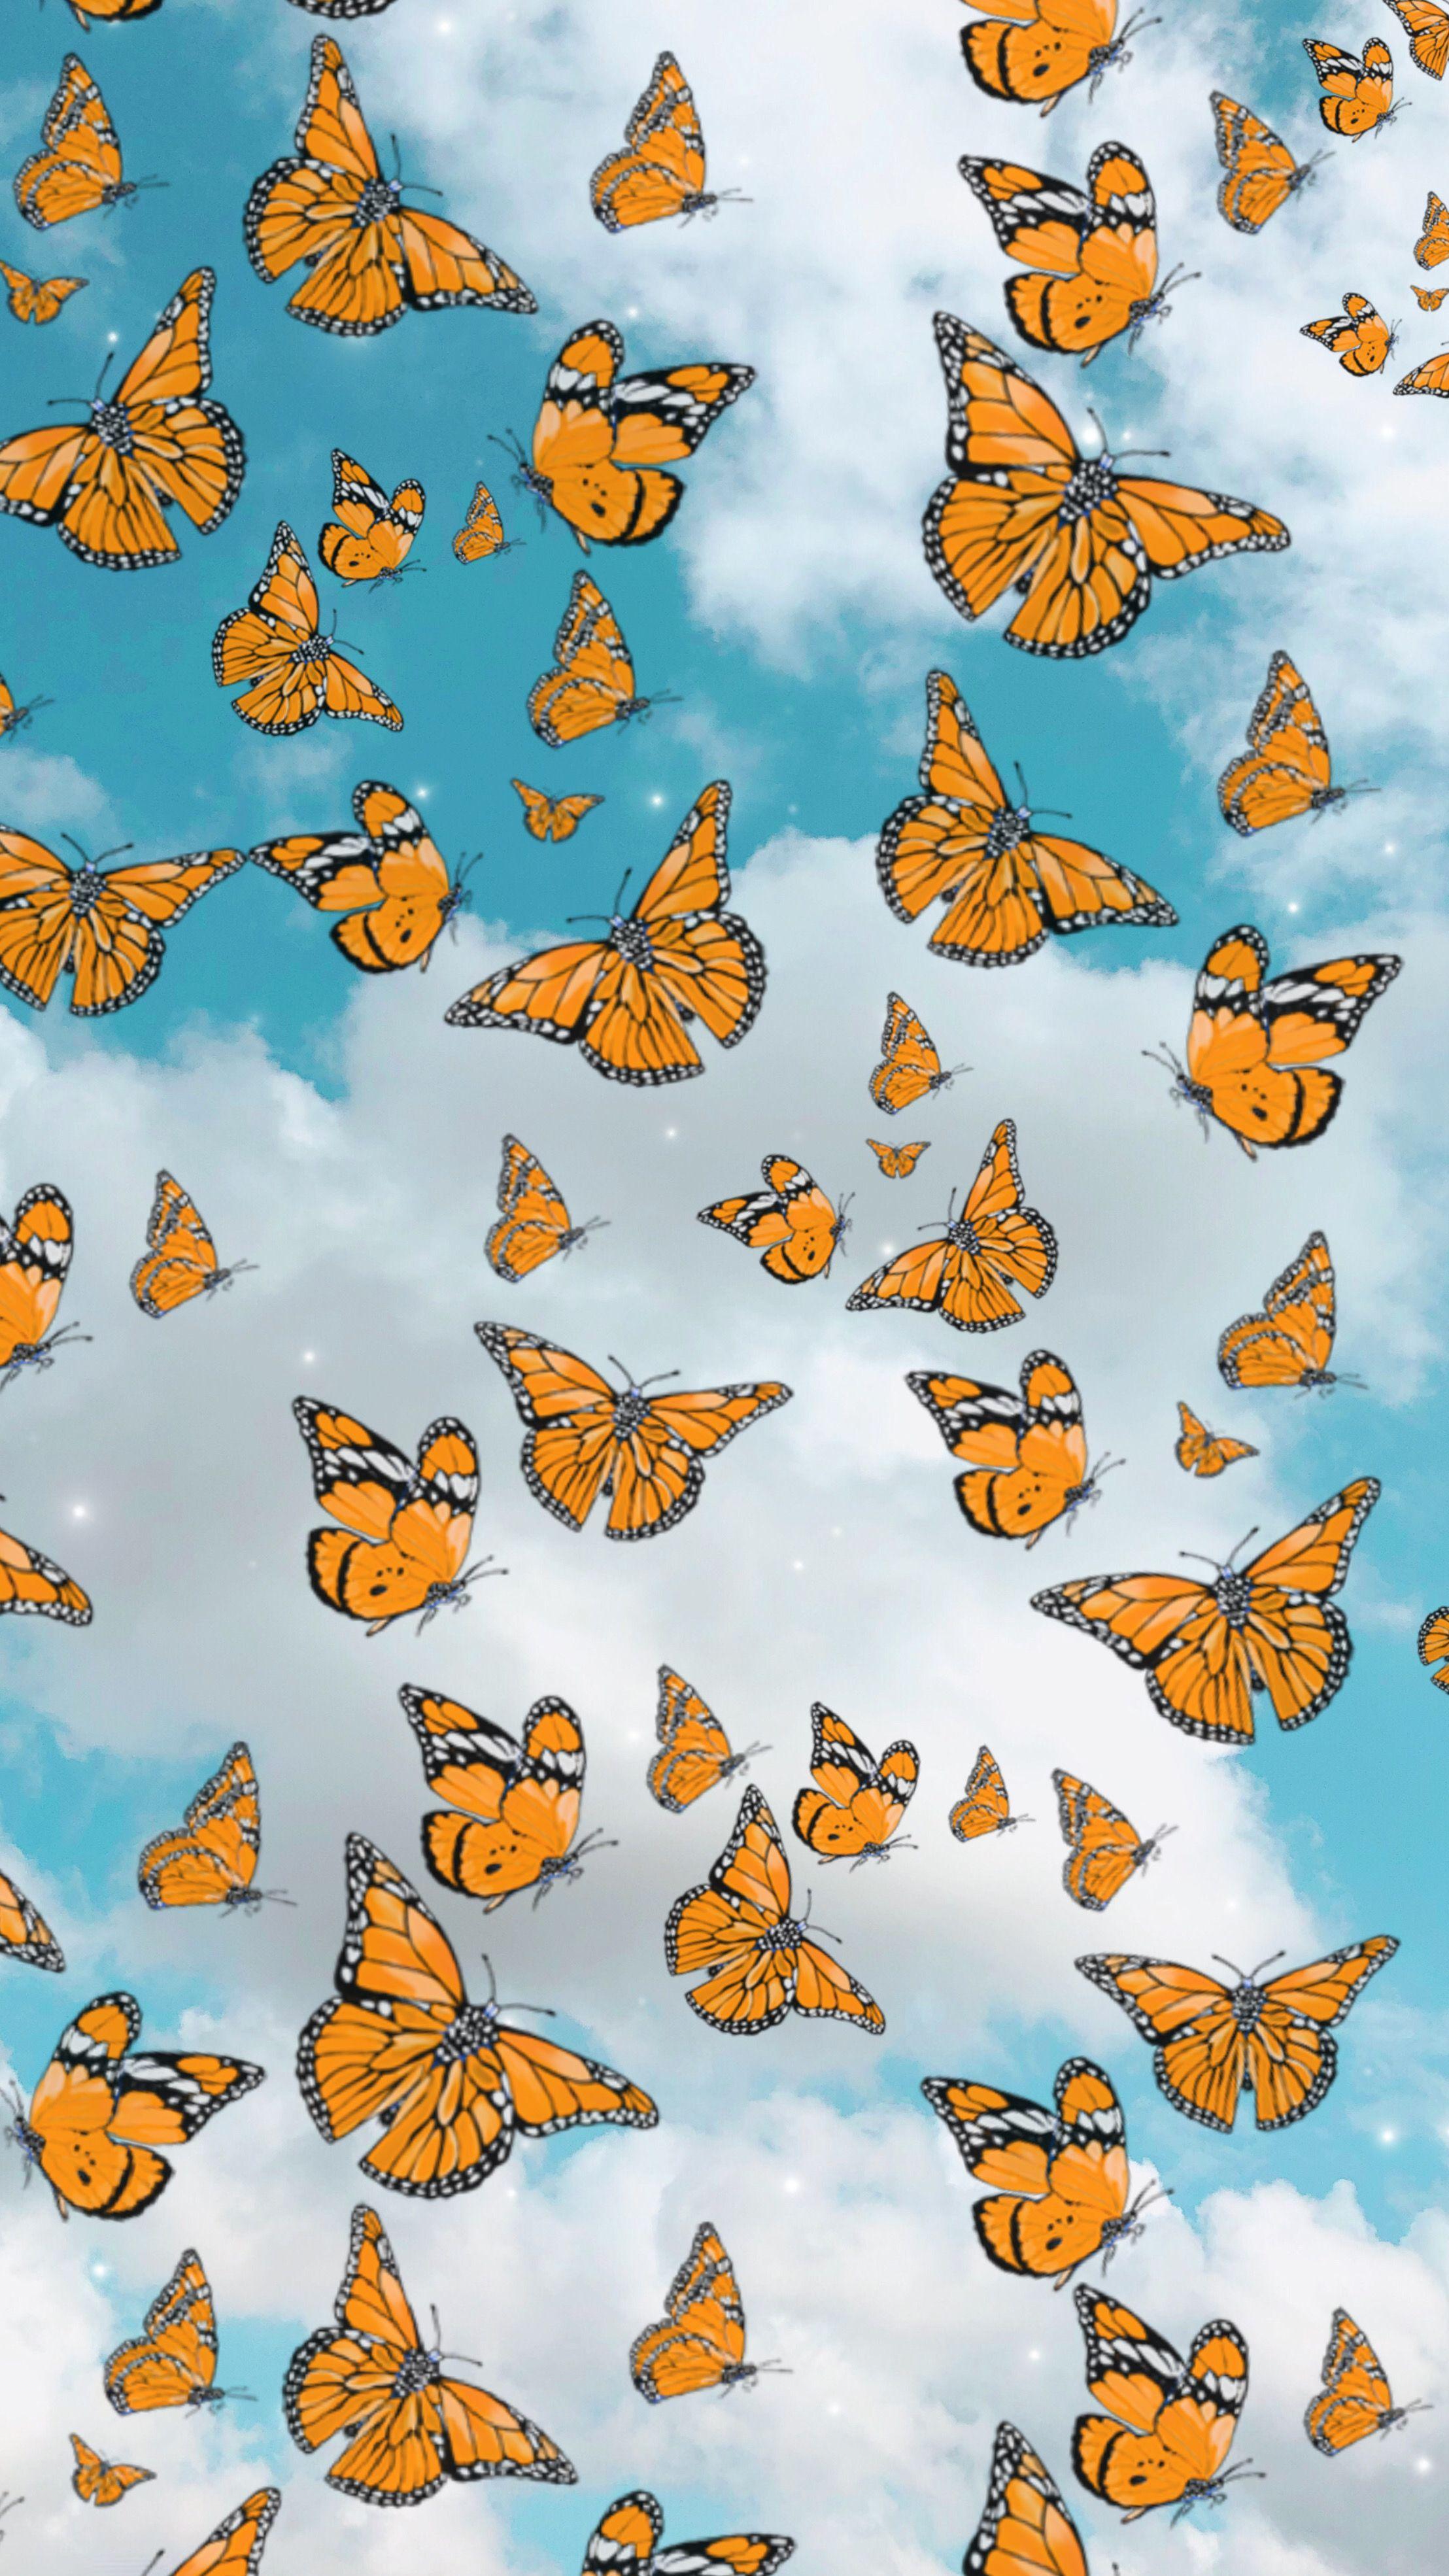 Aesthetic Orange Butterfly Wallpapers - Top Free Aesthetic Orange